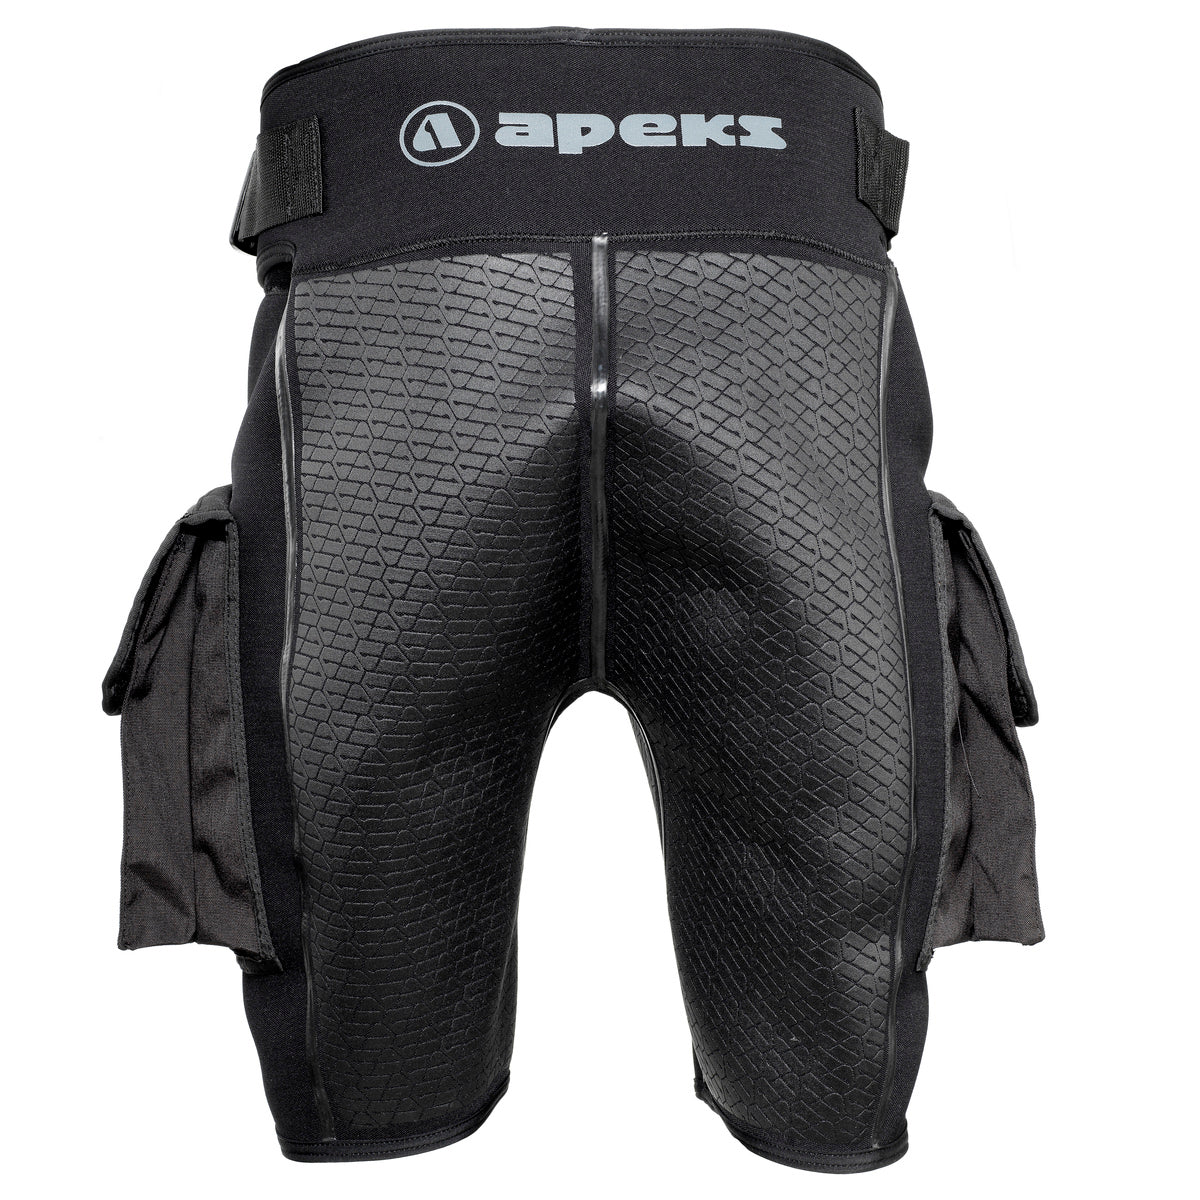 Apeks Apeks Tech Shorts by Oyster Diving Shop